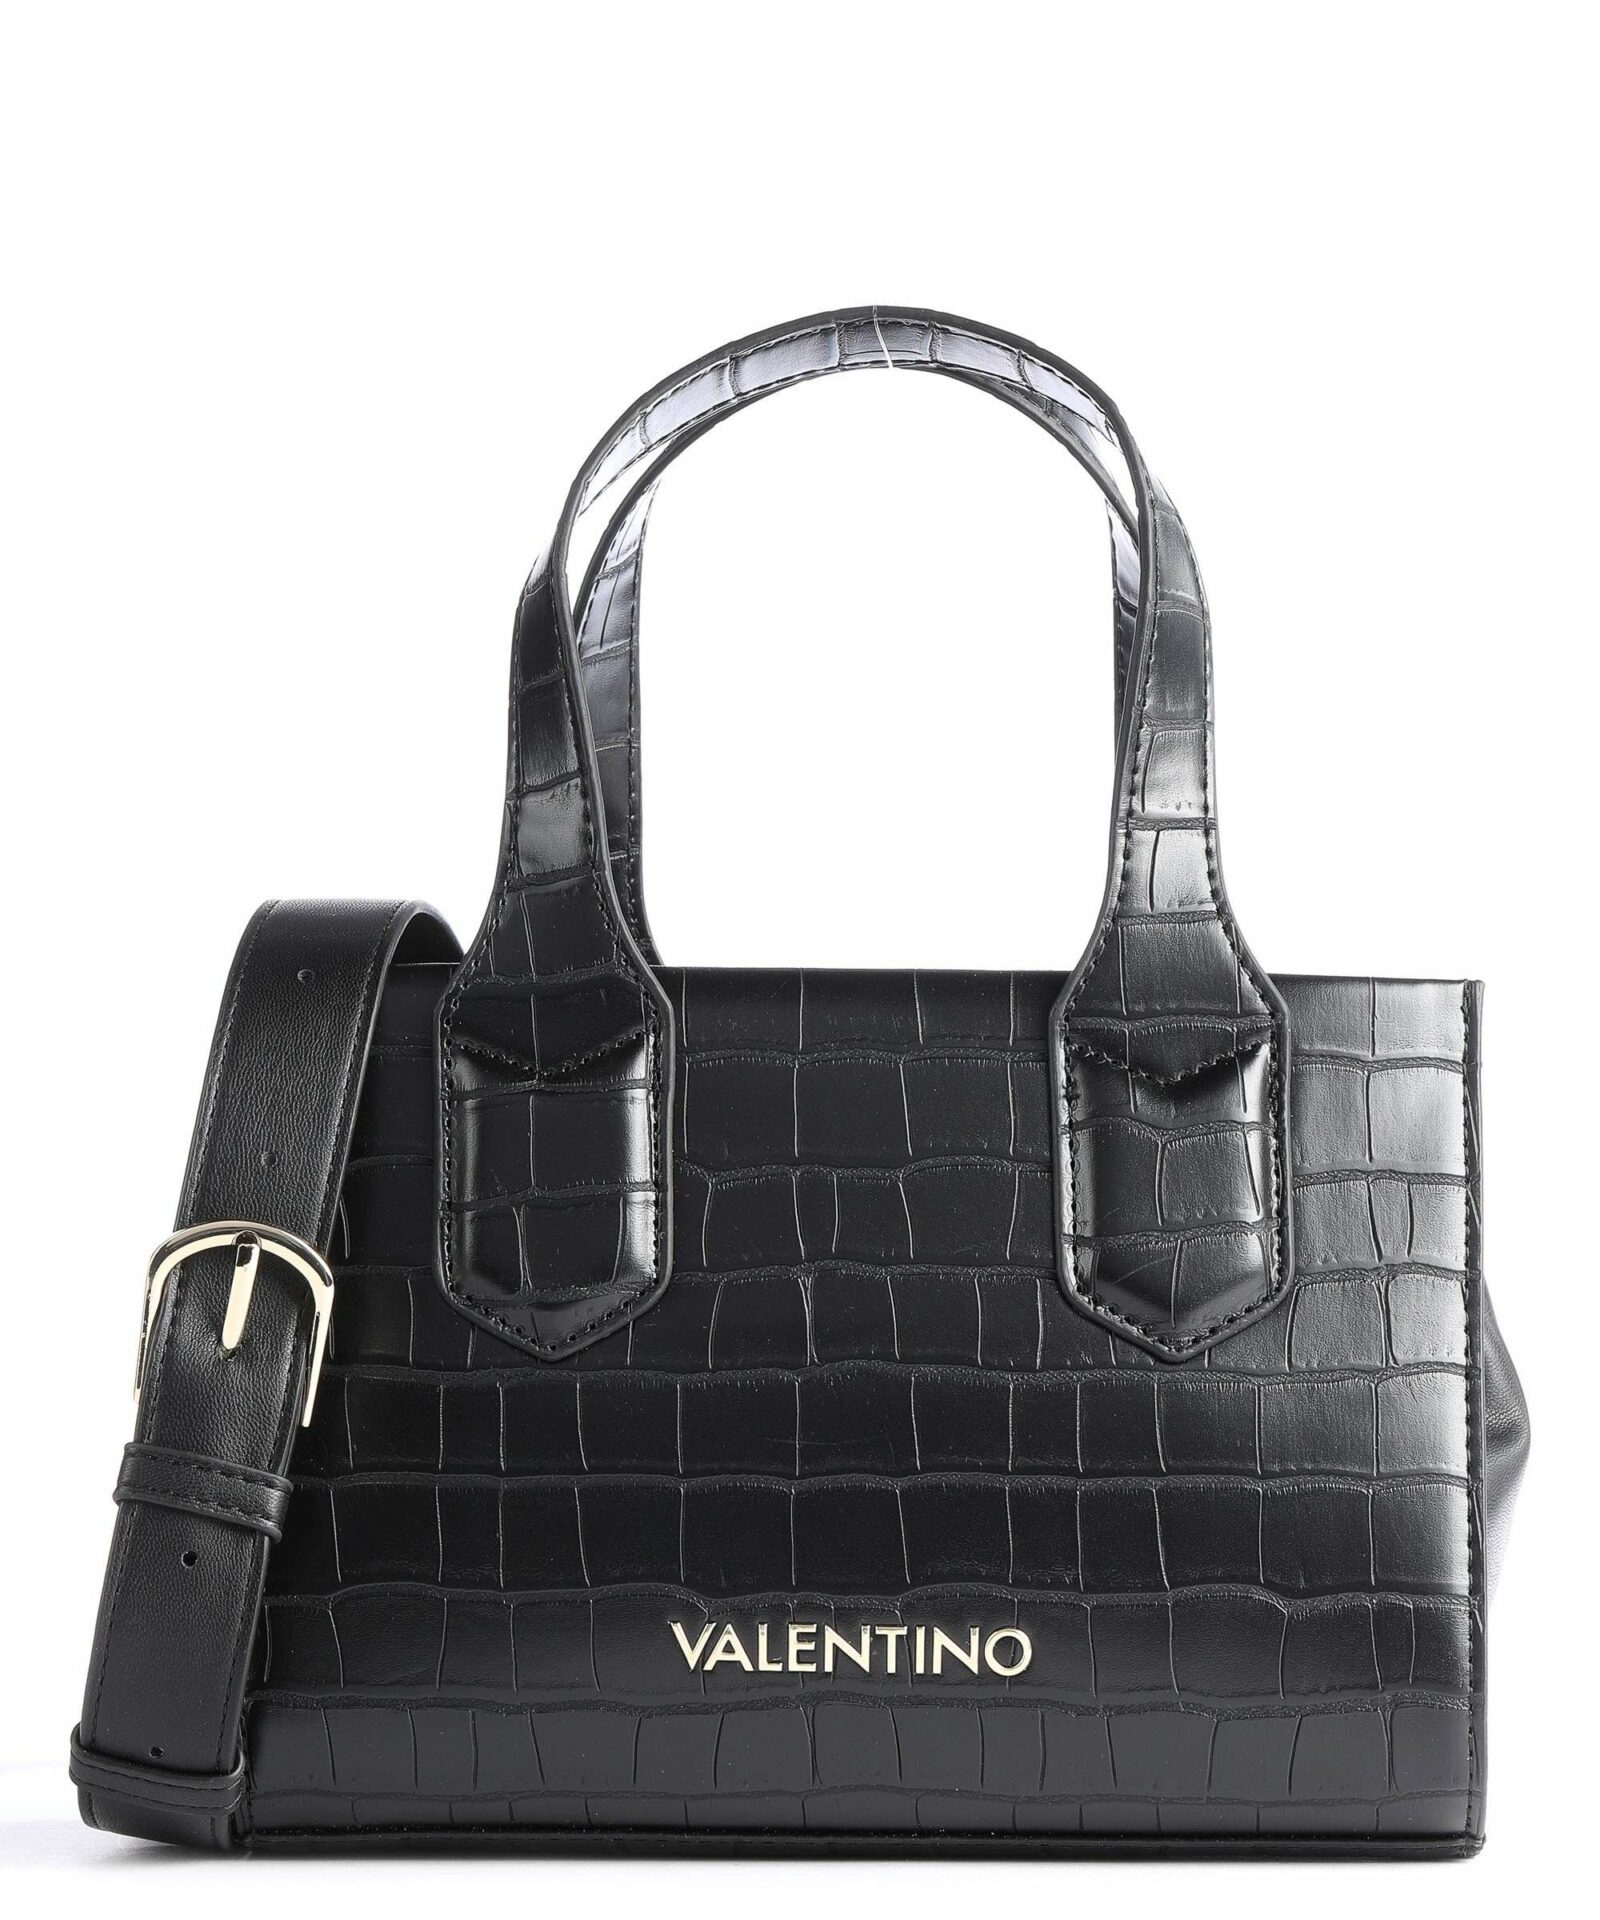 valentino-bags-bigs-crossbody-bag-black-vbs3xj02-001-31 – Elezi